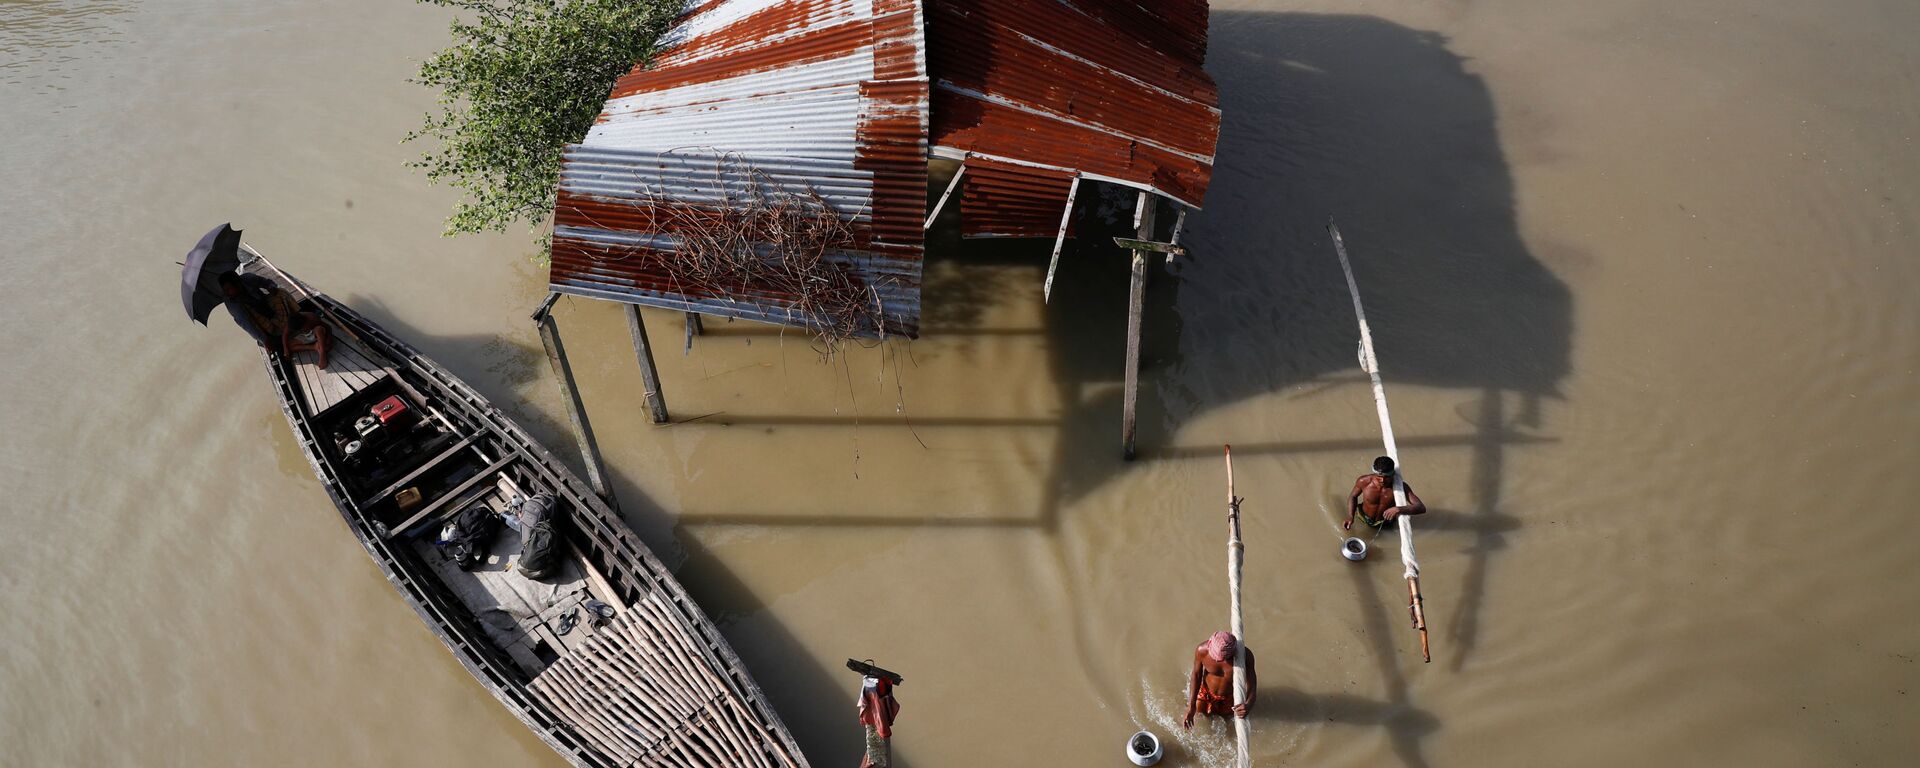 فيضانات آسيا - بنغلادش 18يوليو 2020 - سبوتنيك عربي, 1920, 20.03.2022